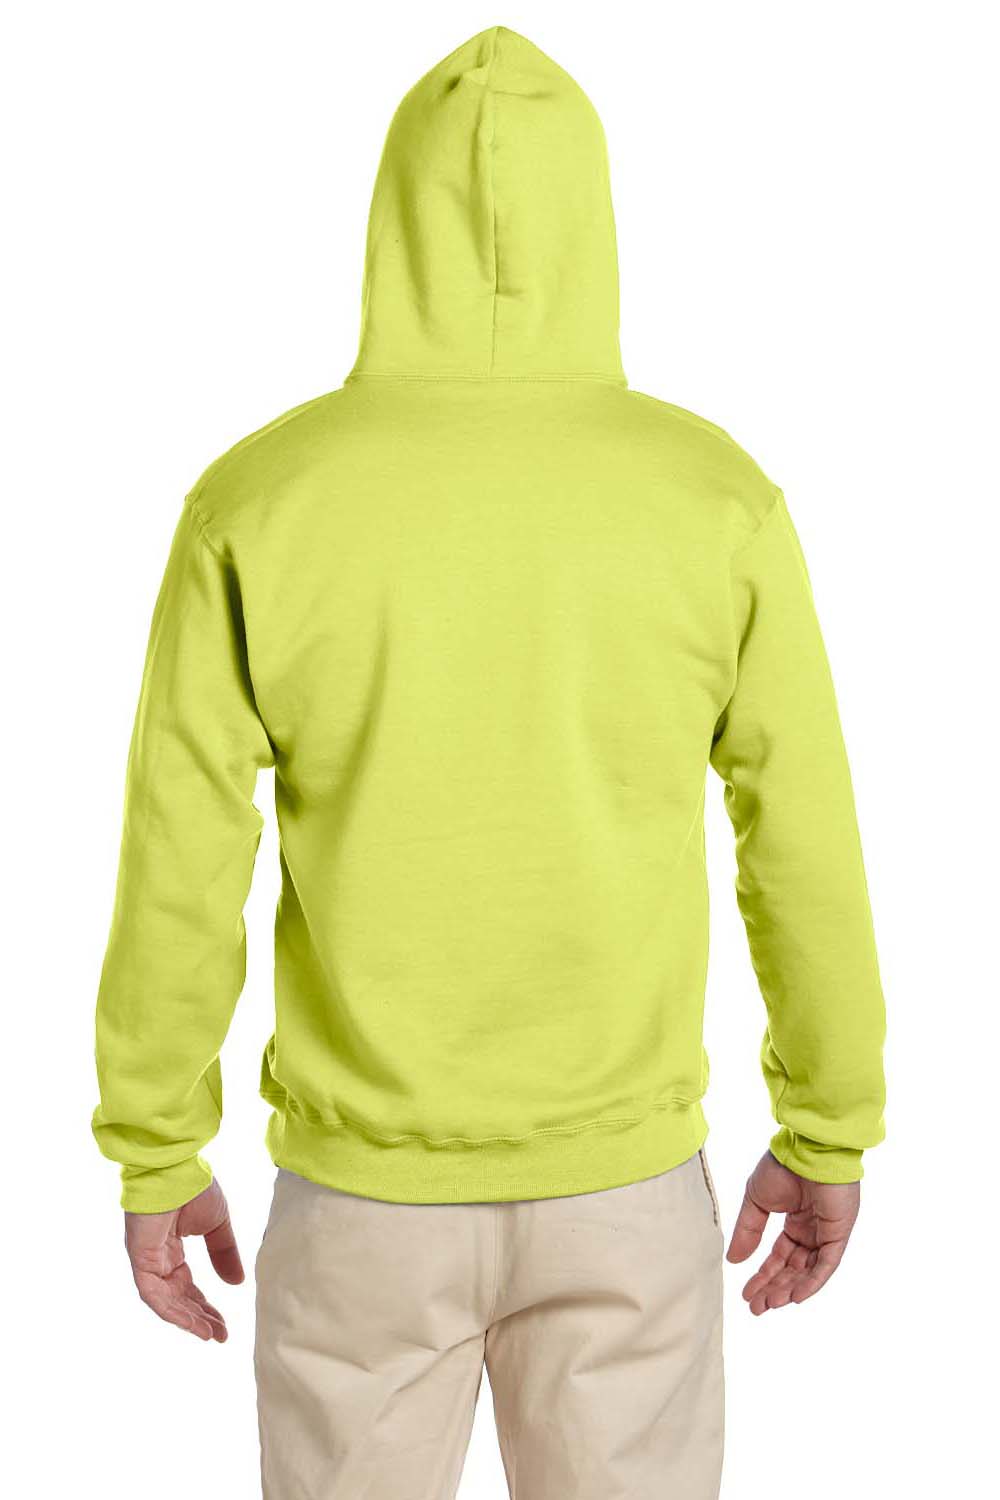 Jerzees 4997 Mens Super Sweats NuBlend Fleece Hooded Sweatshirt Hoodie Safety Green Back